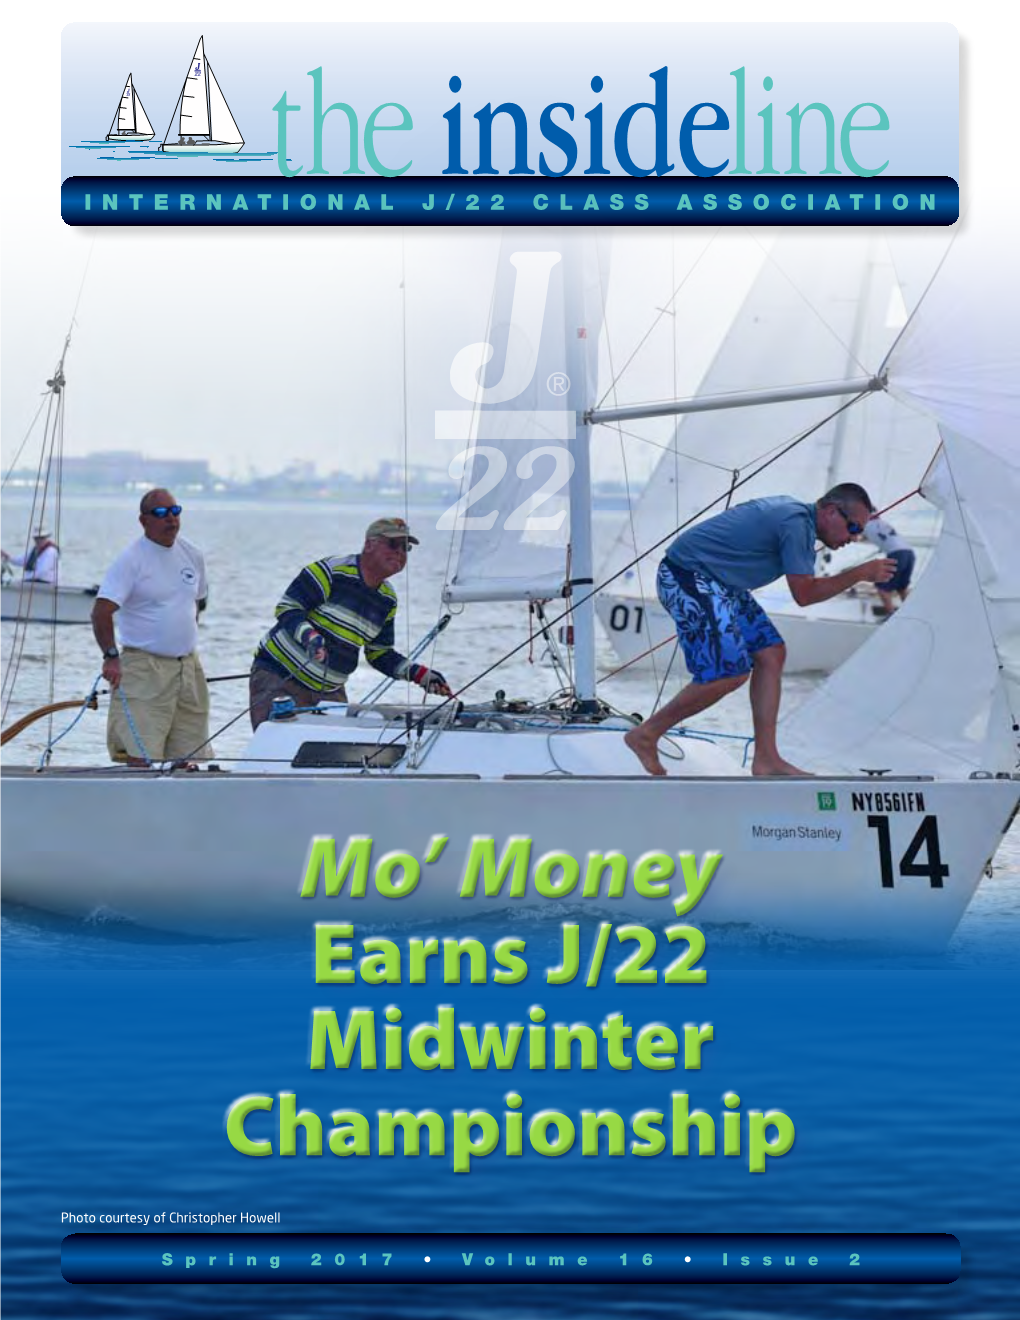 Mo' Money Earns J/22 Midwinter Championship